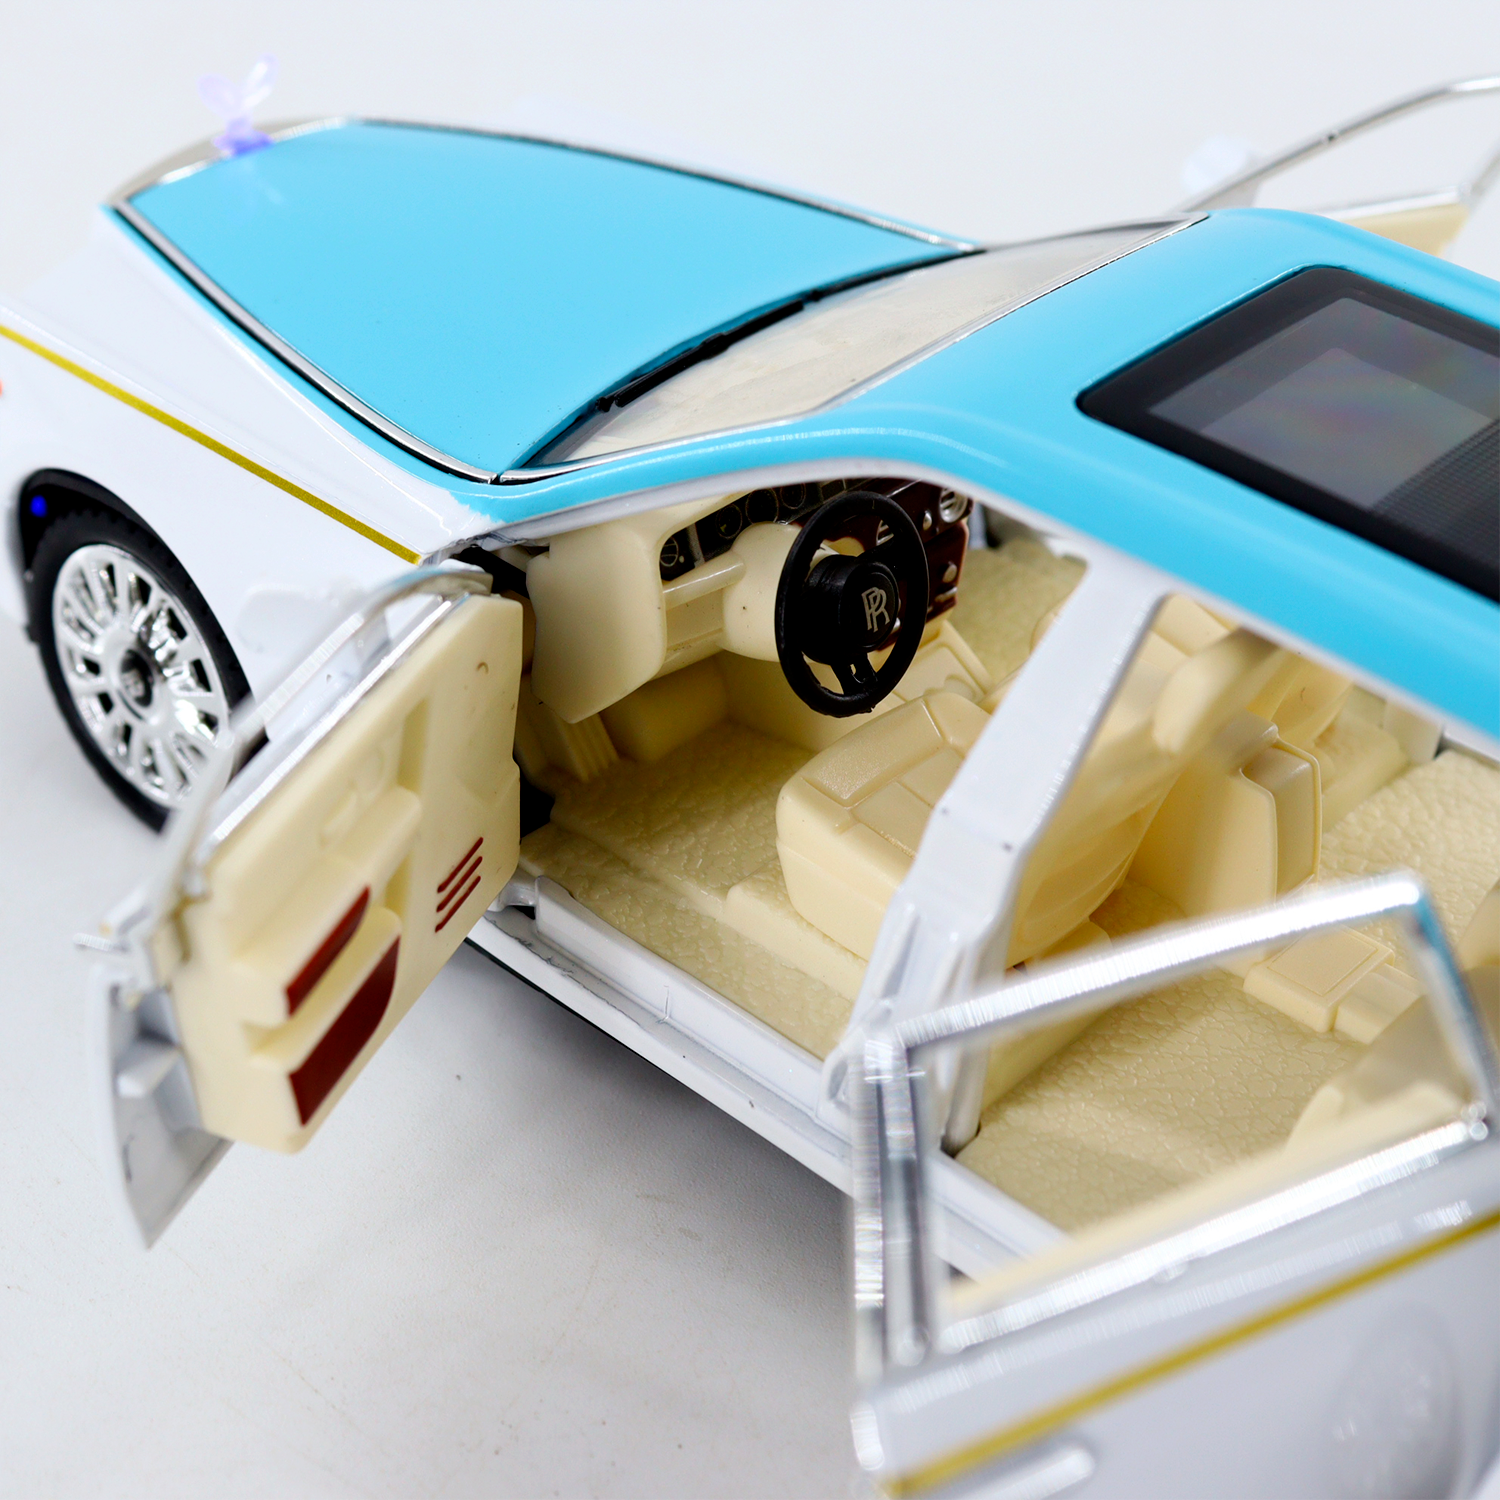 Rolls Royce Phantom Metal die cast Car Toy with Sound (White & Blue)